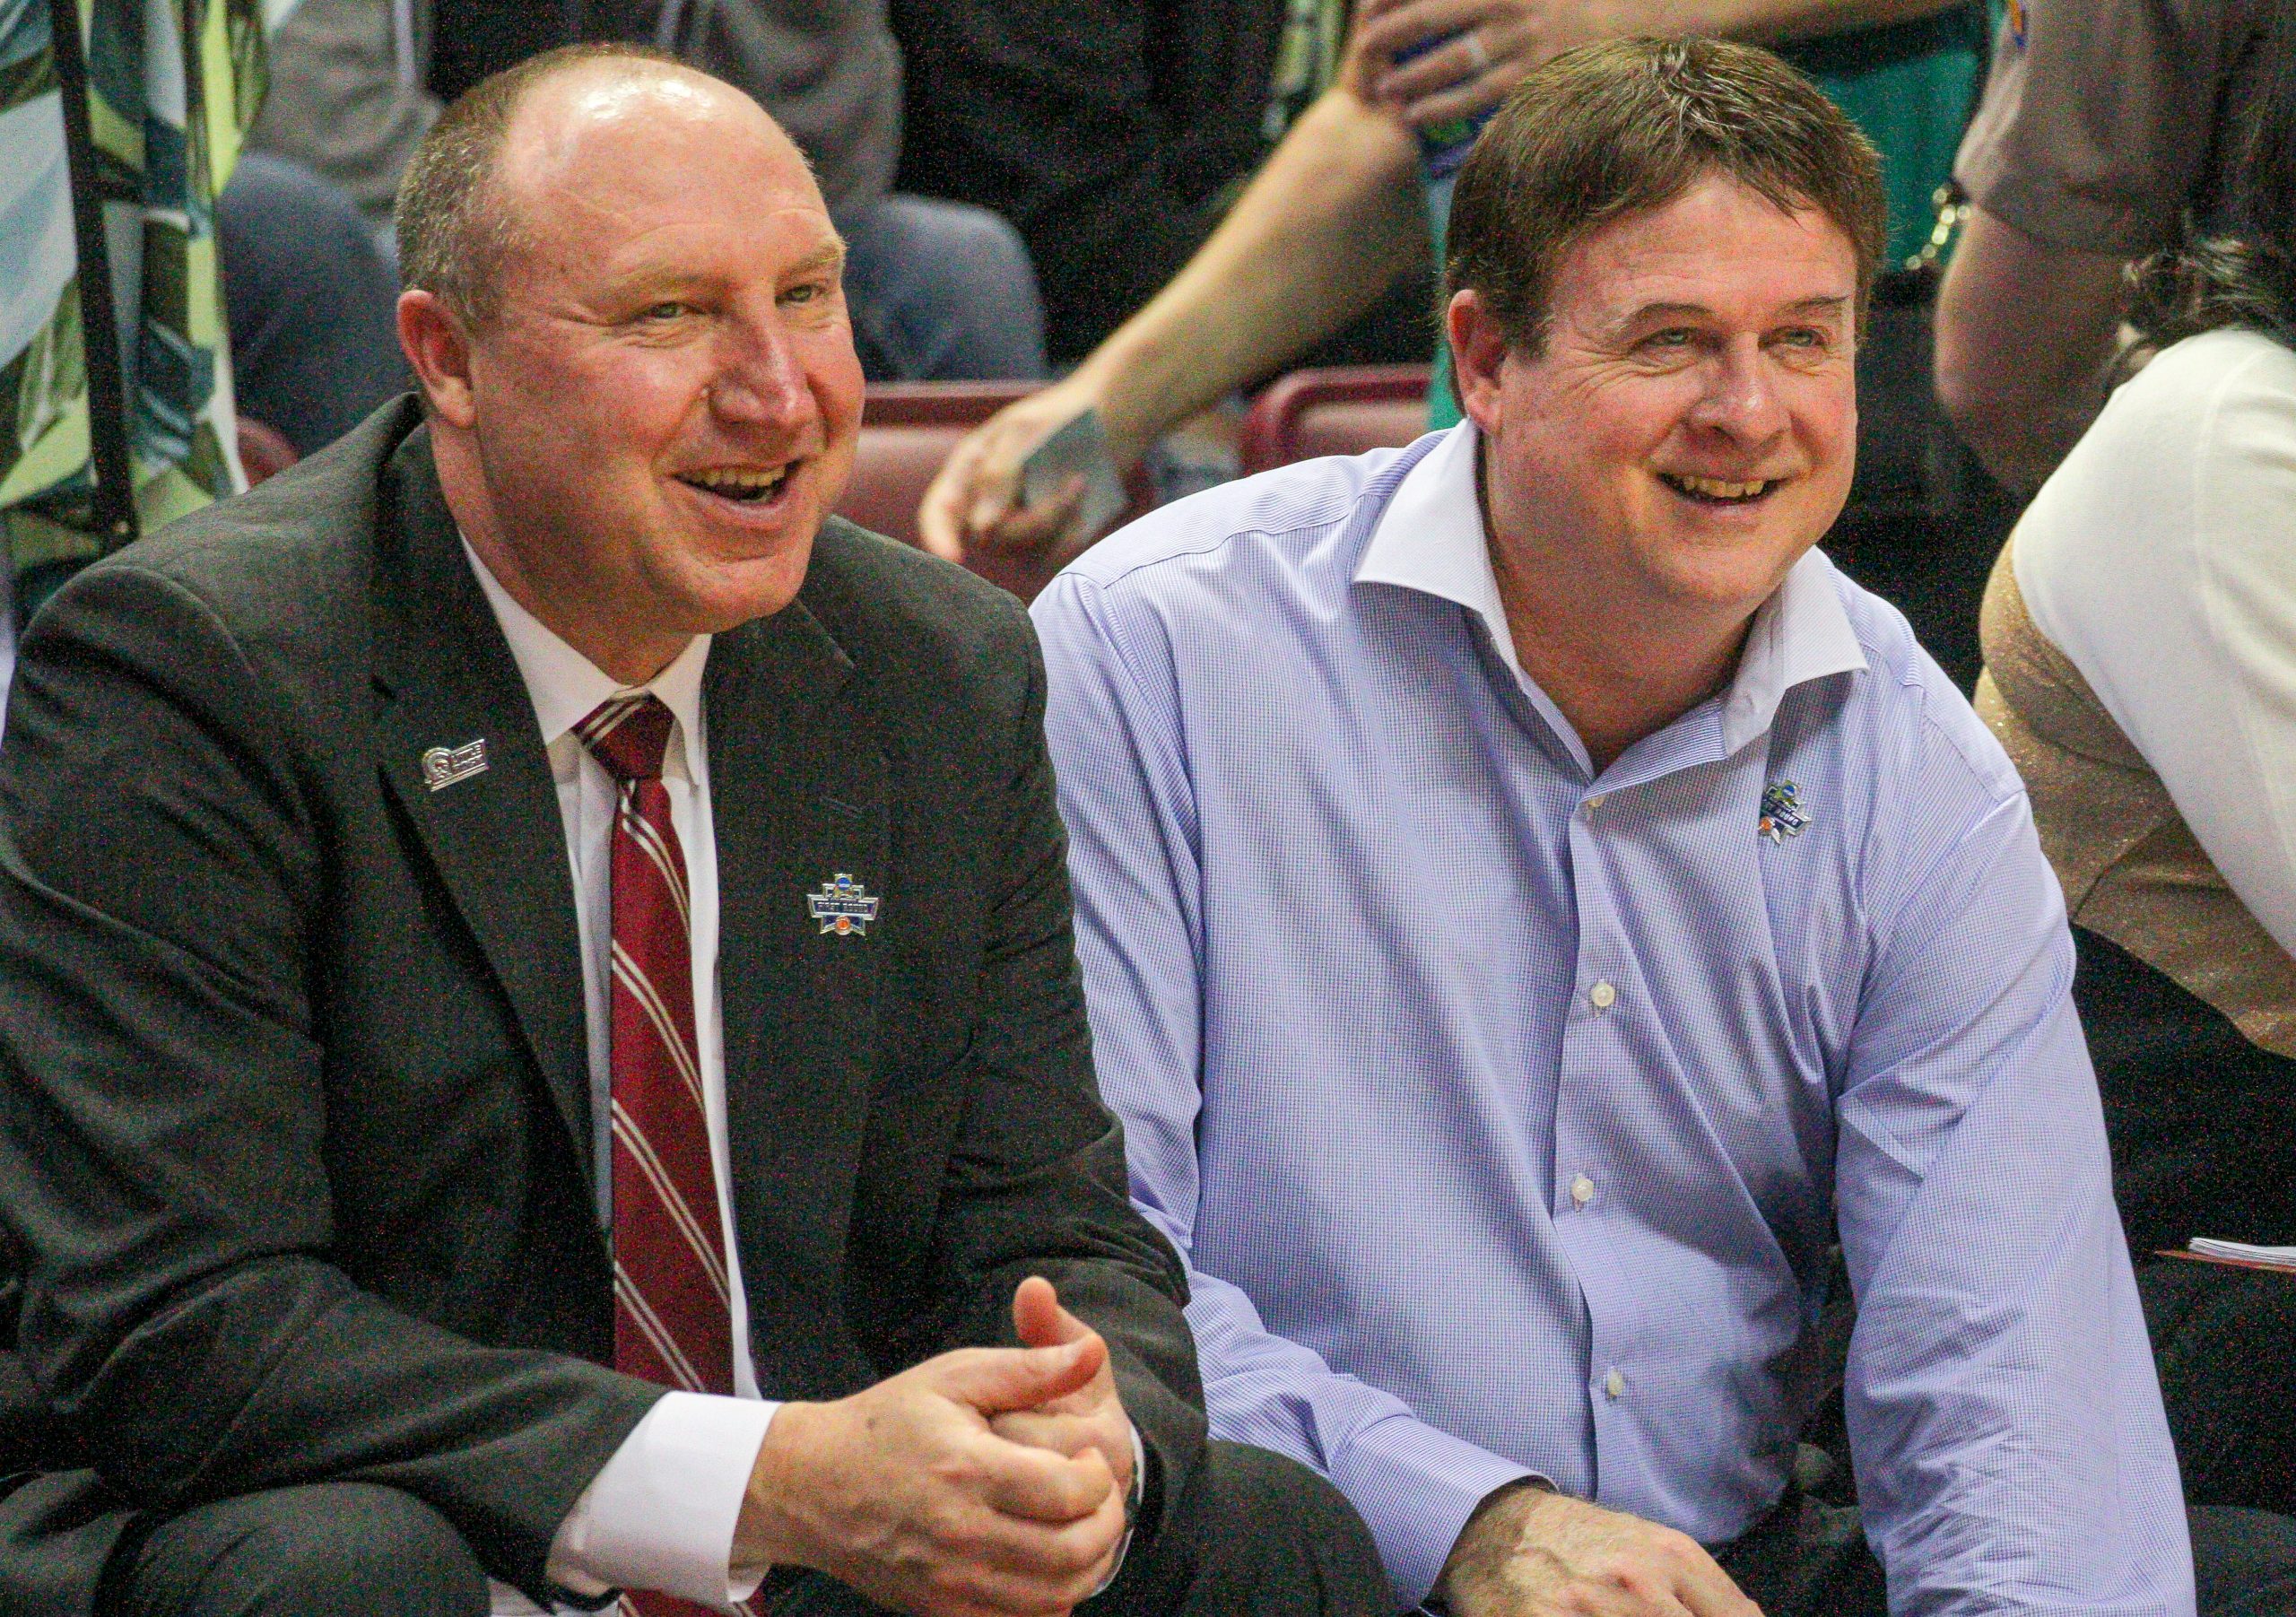 Coach Steve Wiedower and Coach Joe Foley. Photo by Ben Krain.